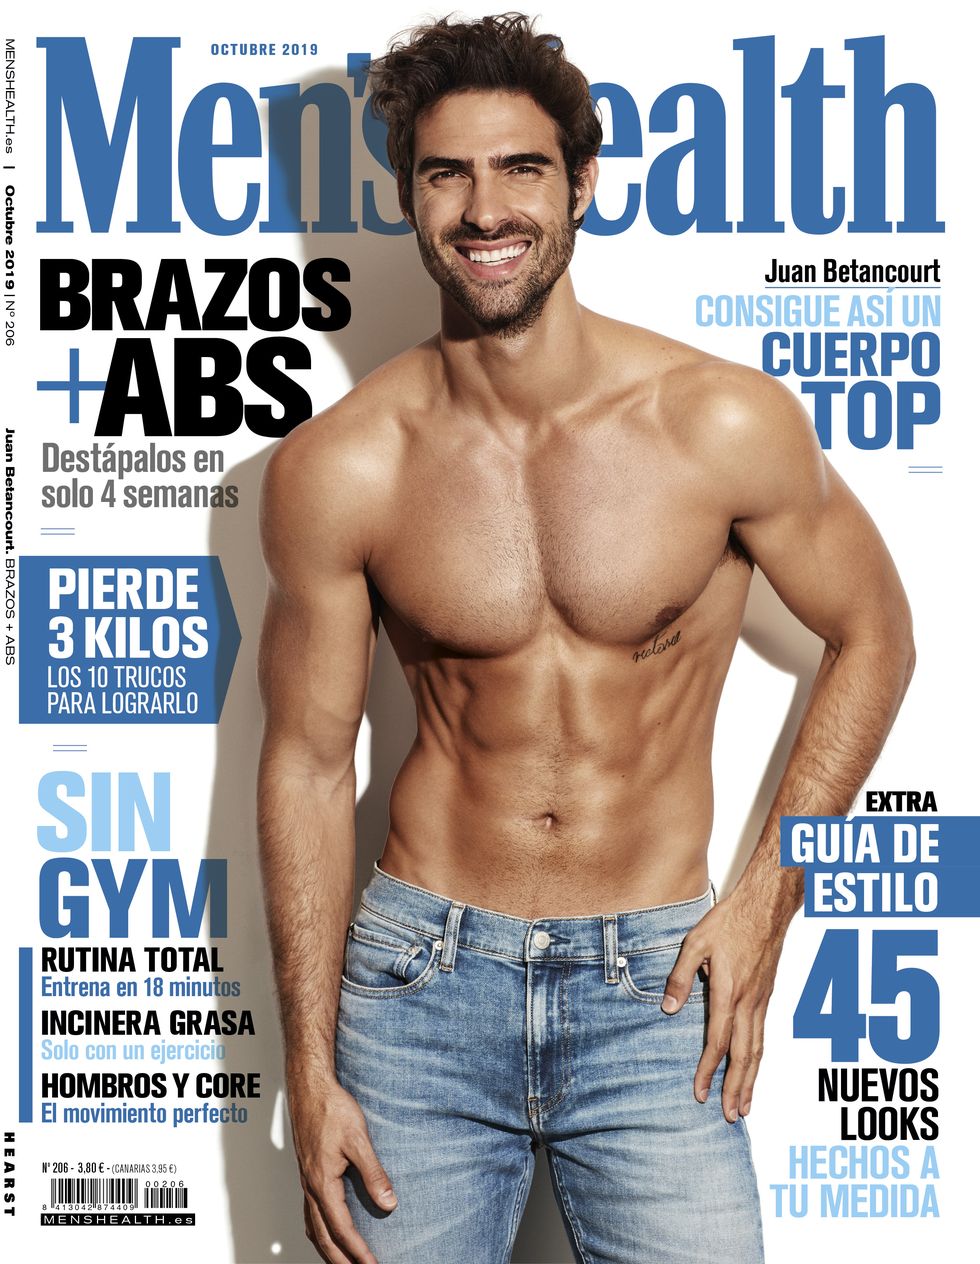 juan betancourt en la portada de men's health españa